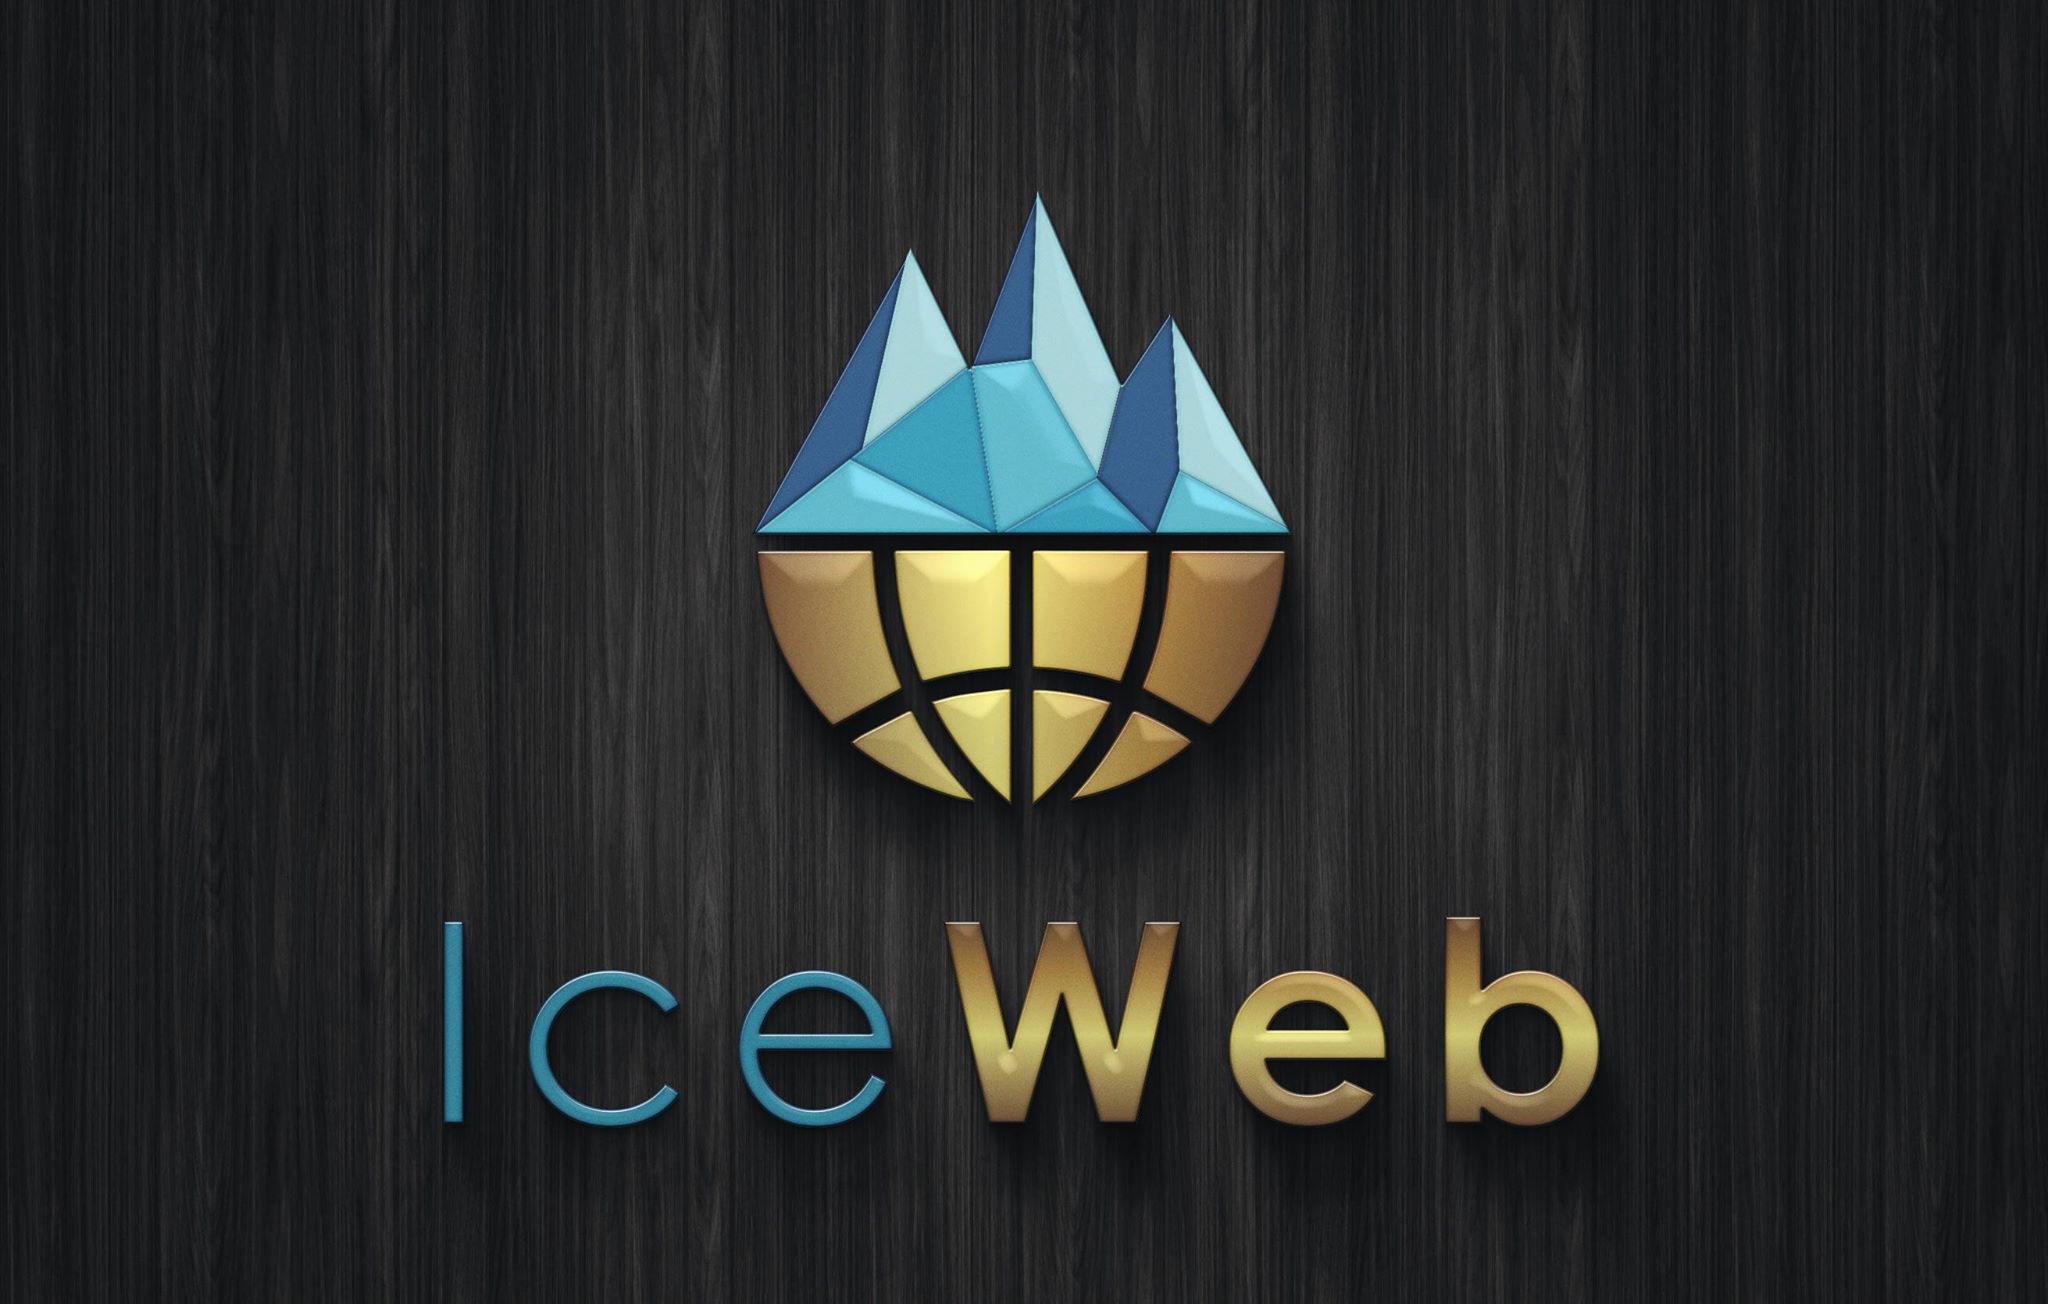 IceWeb - Web Design & SEO Company Miami